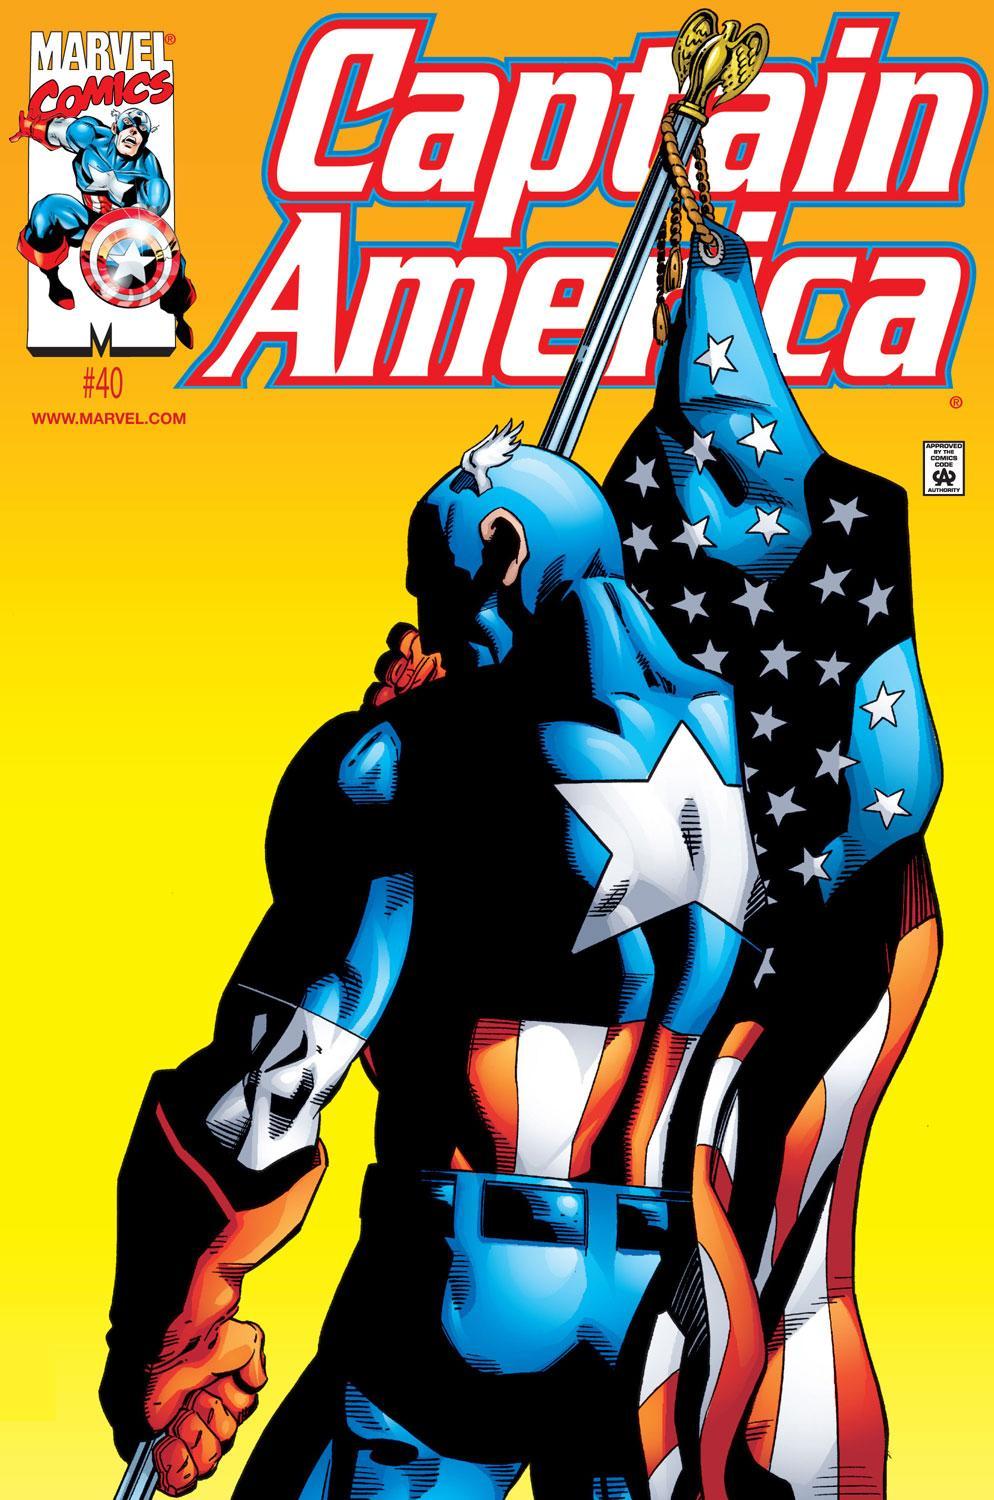 CAPTAIN AMERICA #36#37#38#40 - MARVEL COMICS (2001)